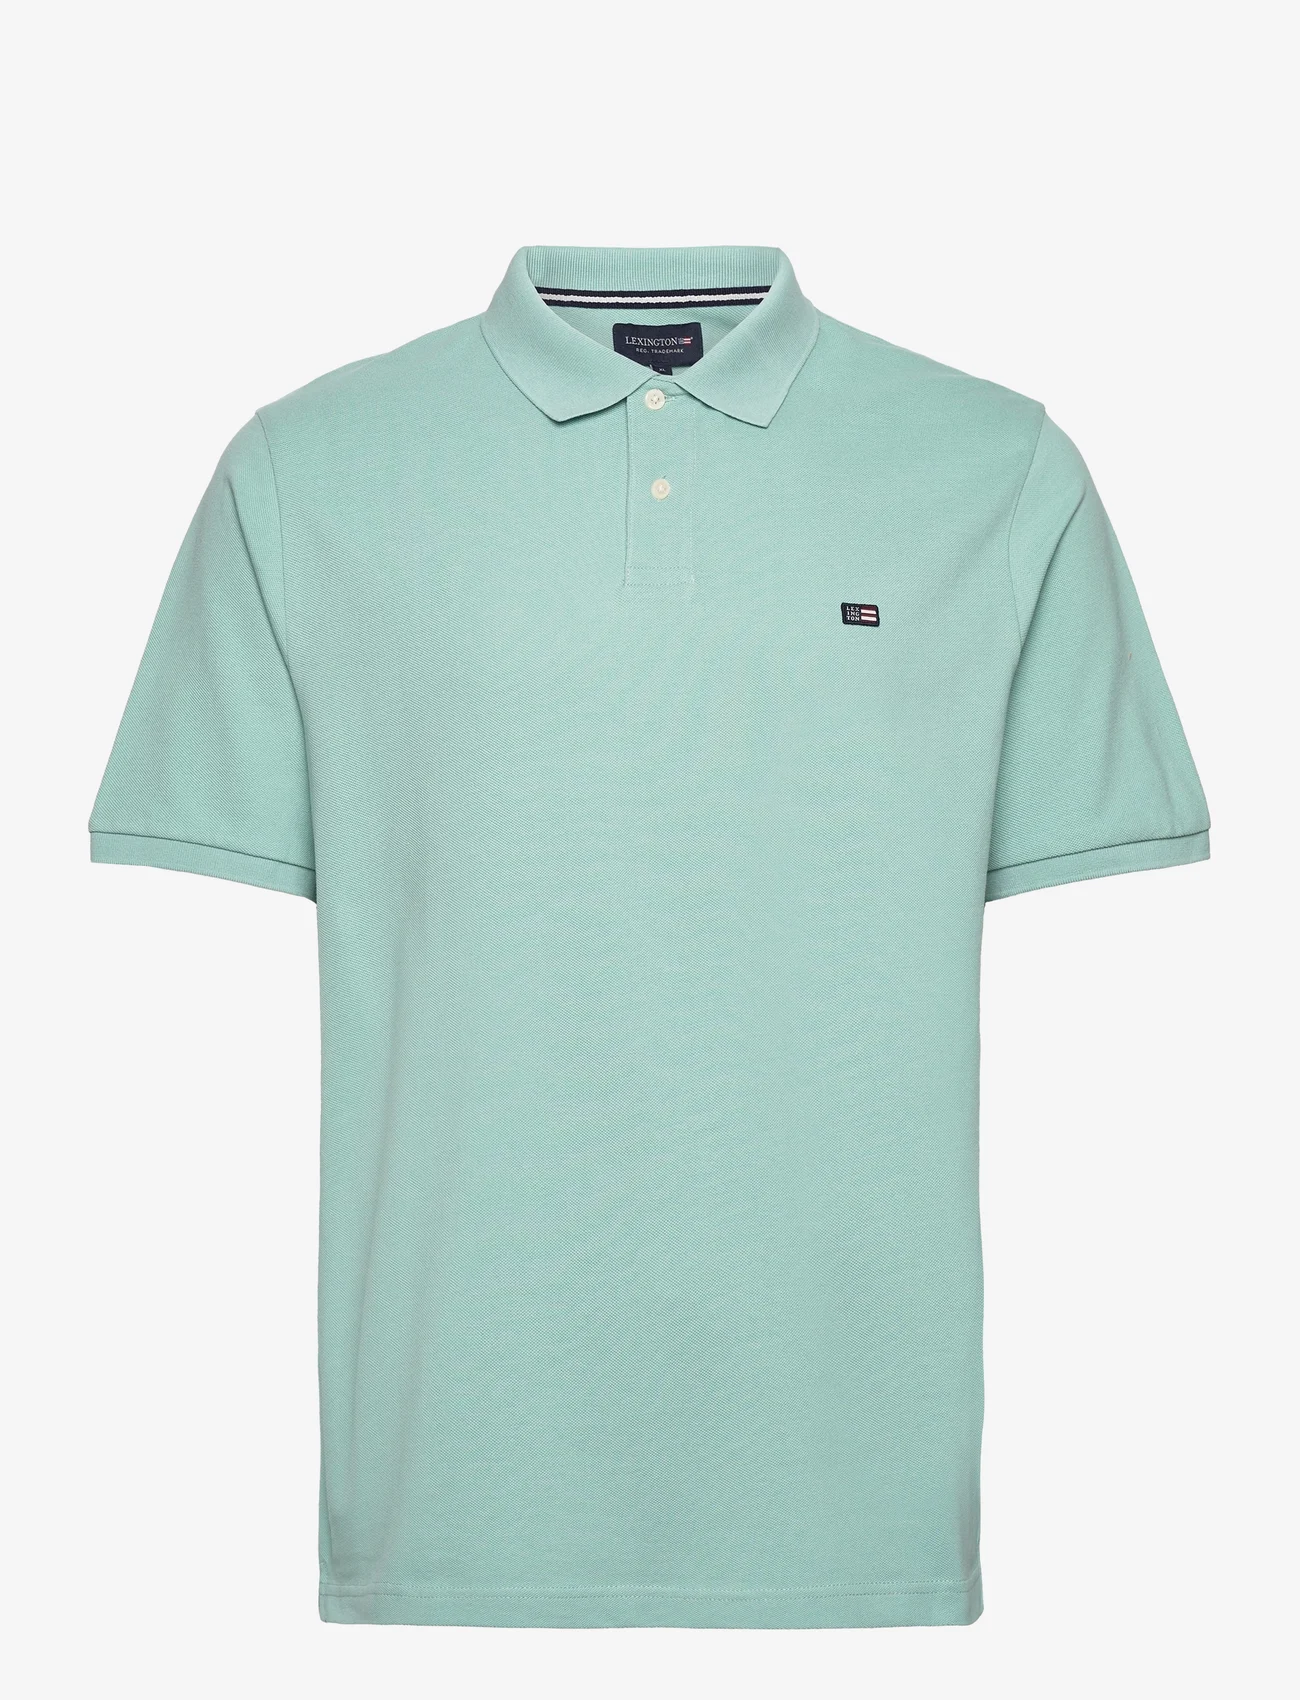 Lexington Clothing - Jeromy Polo - lühikeste varrukatega polod - light green - 0